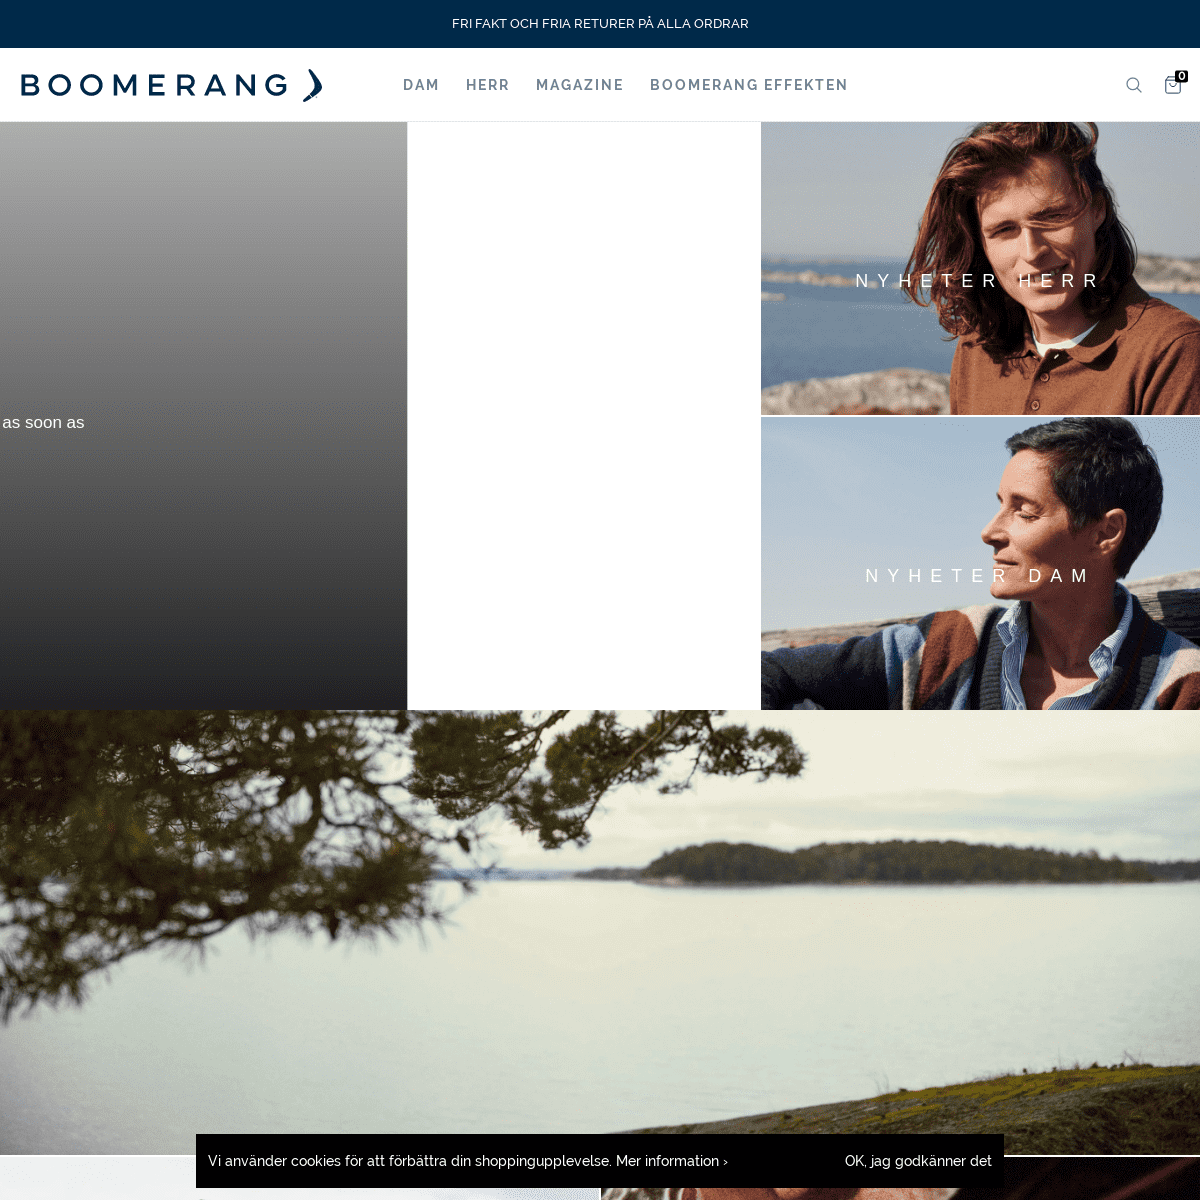 Boomerang ® - Officiell webbshop